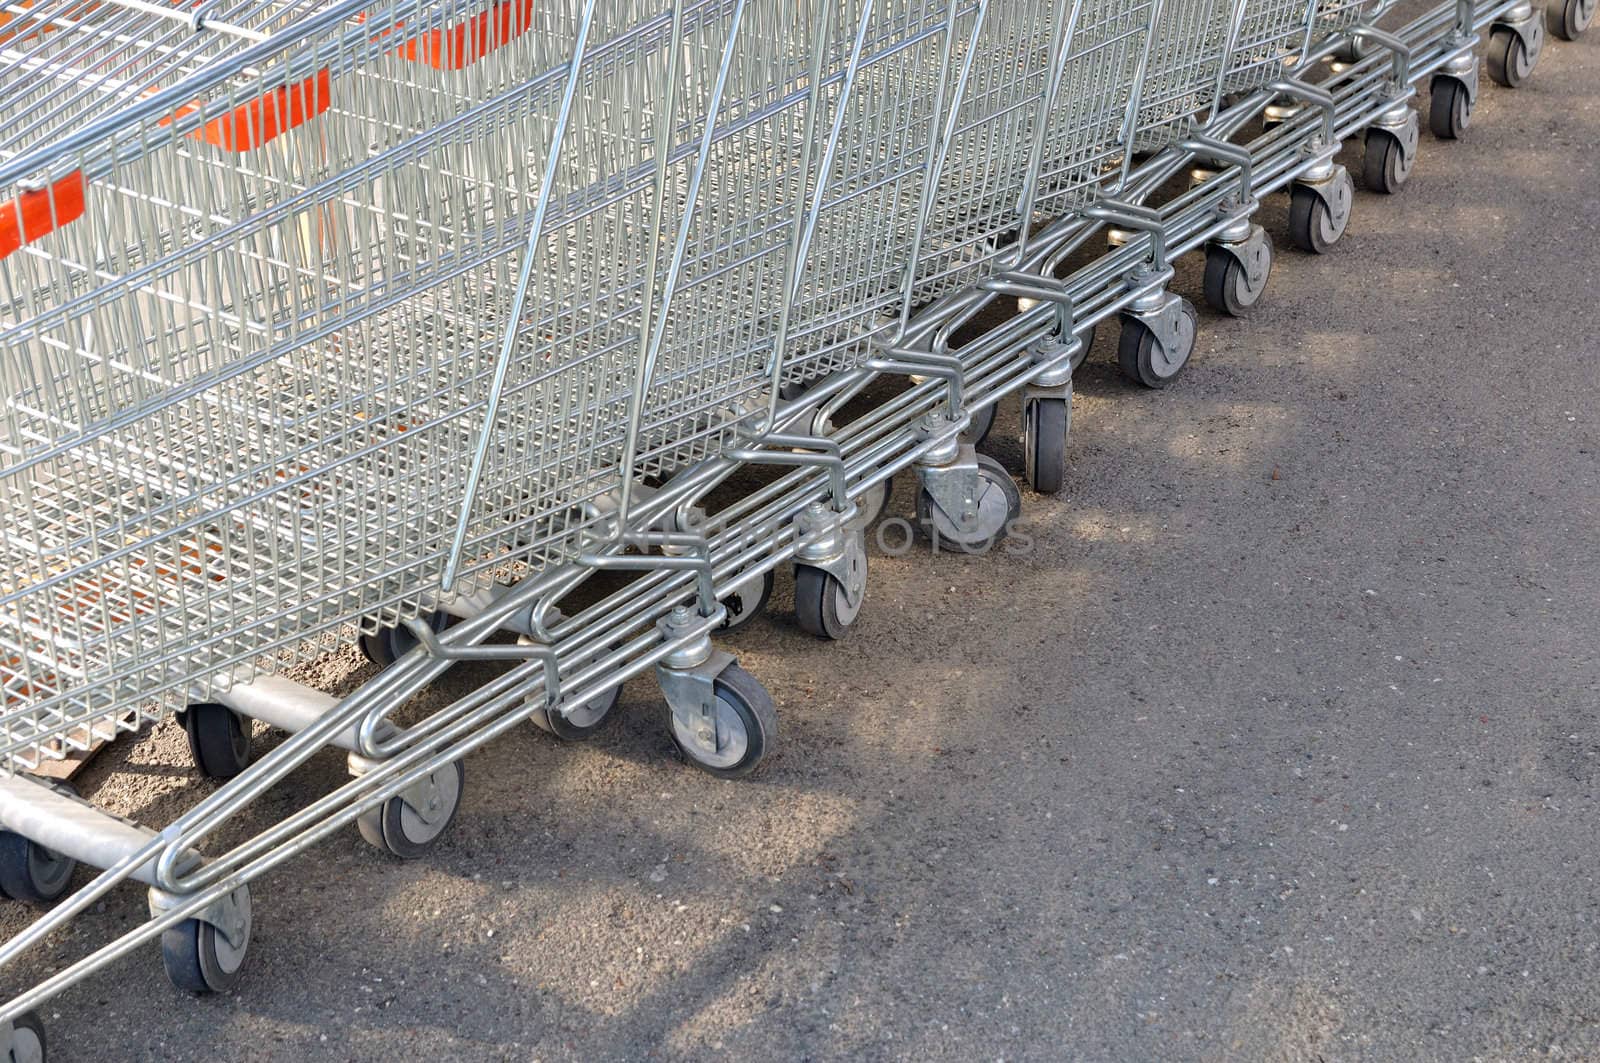 Shopping carts by zagart36